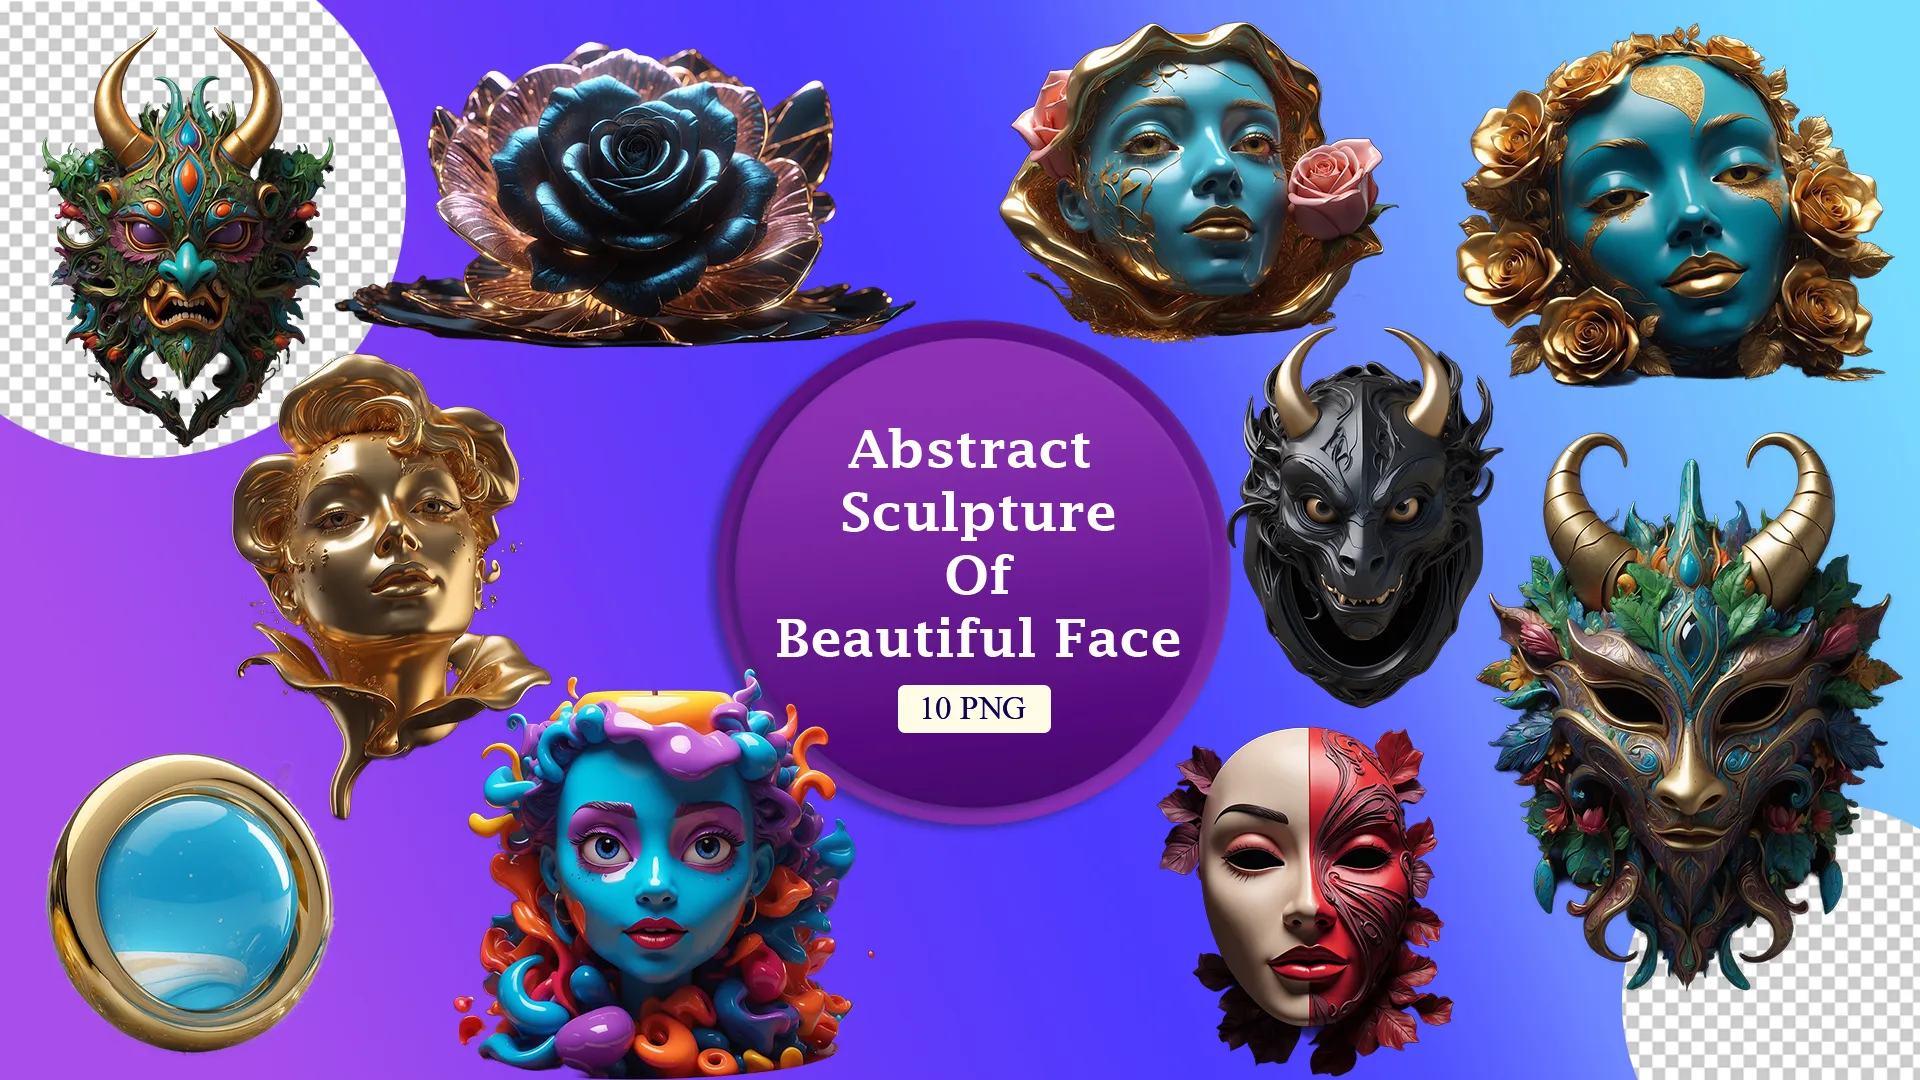 Sculptural Faces and Floral 3D Art Pack